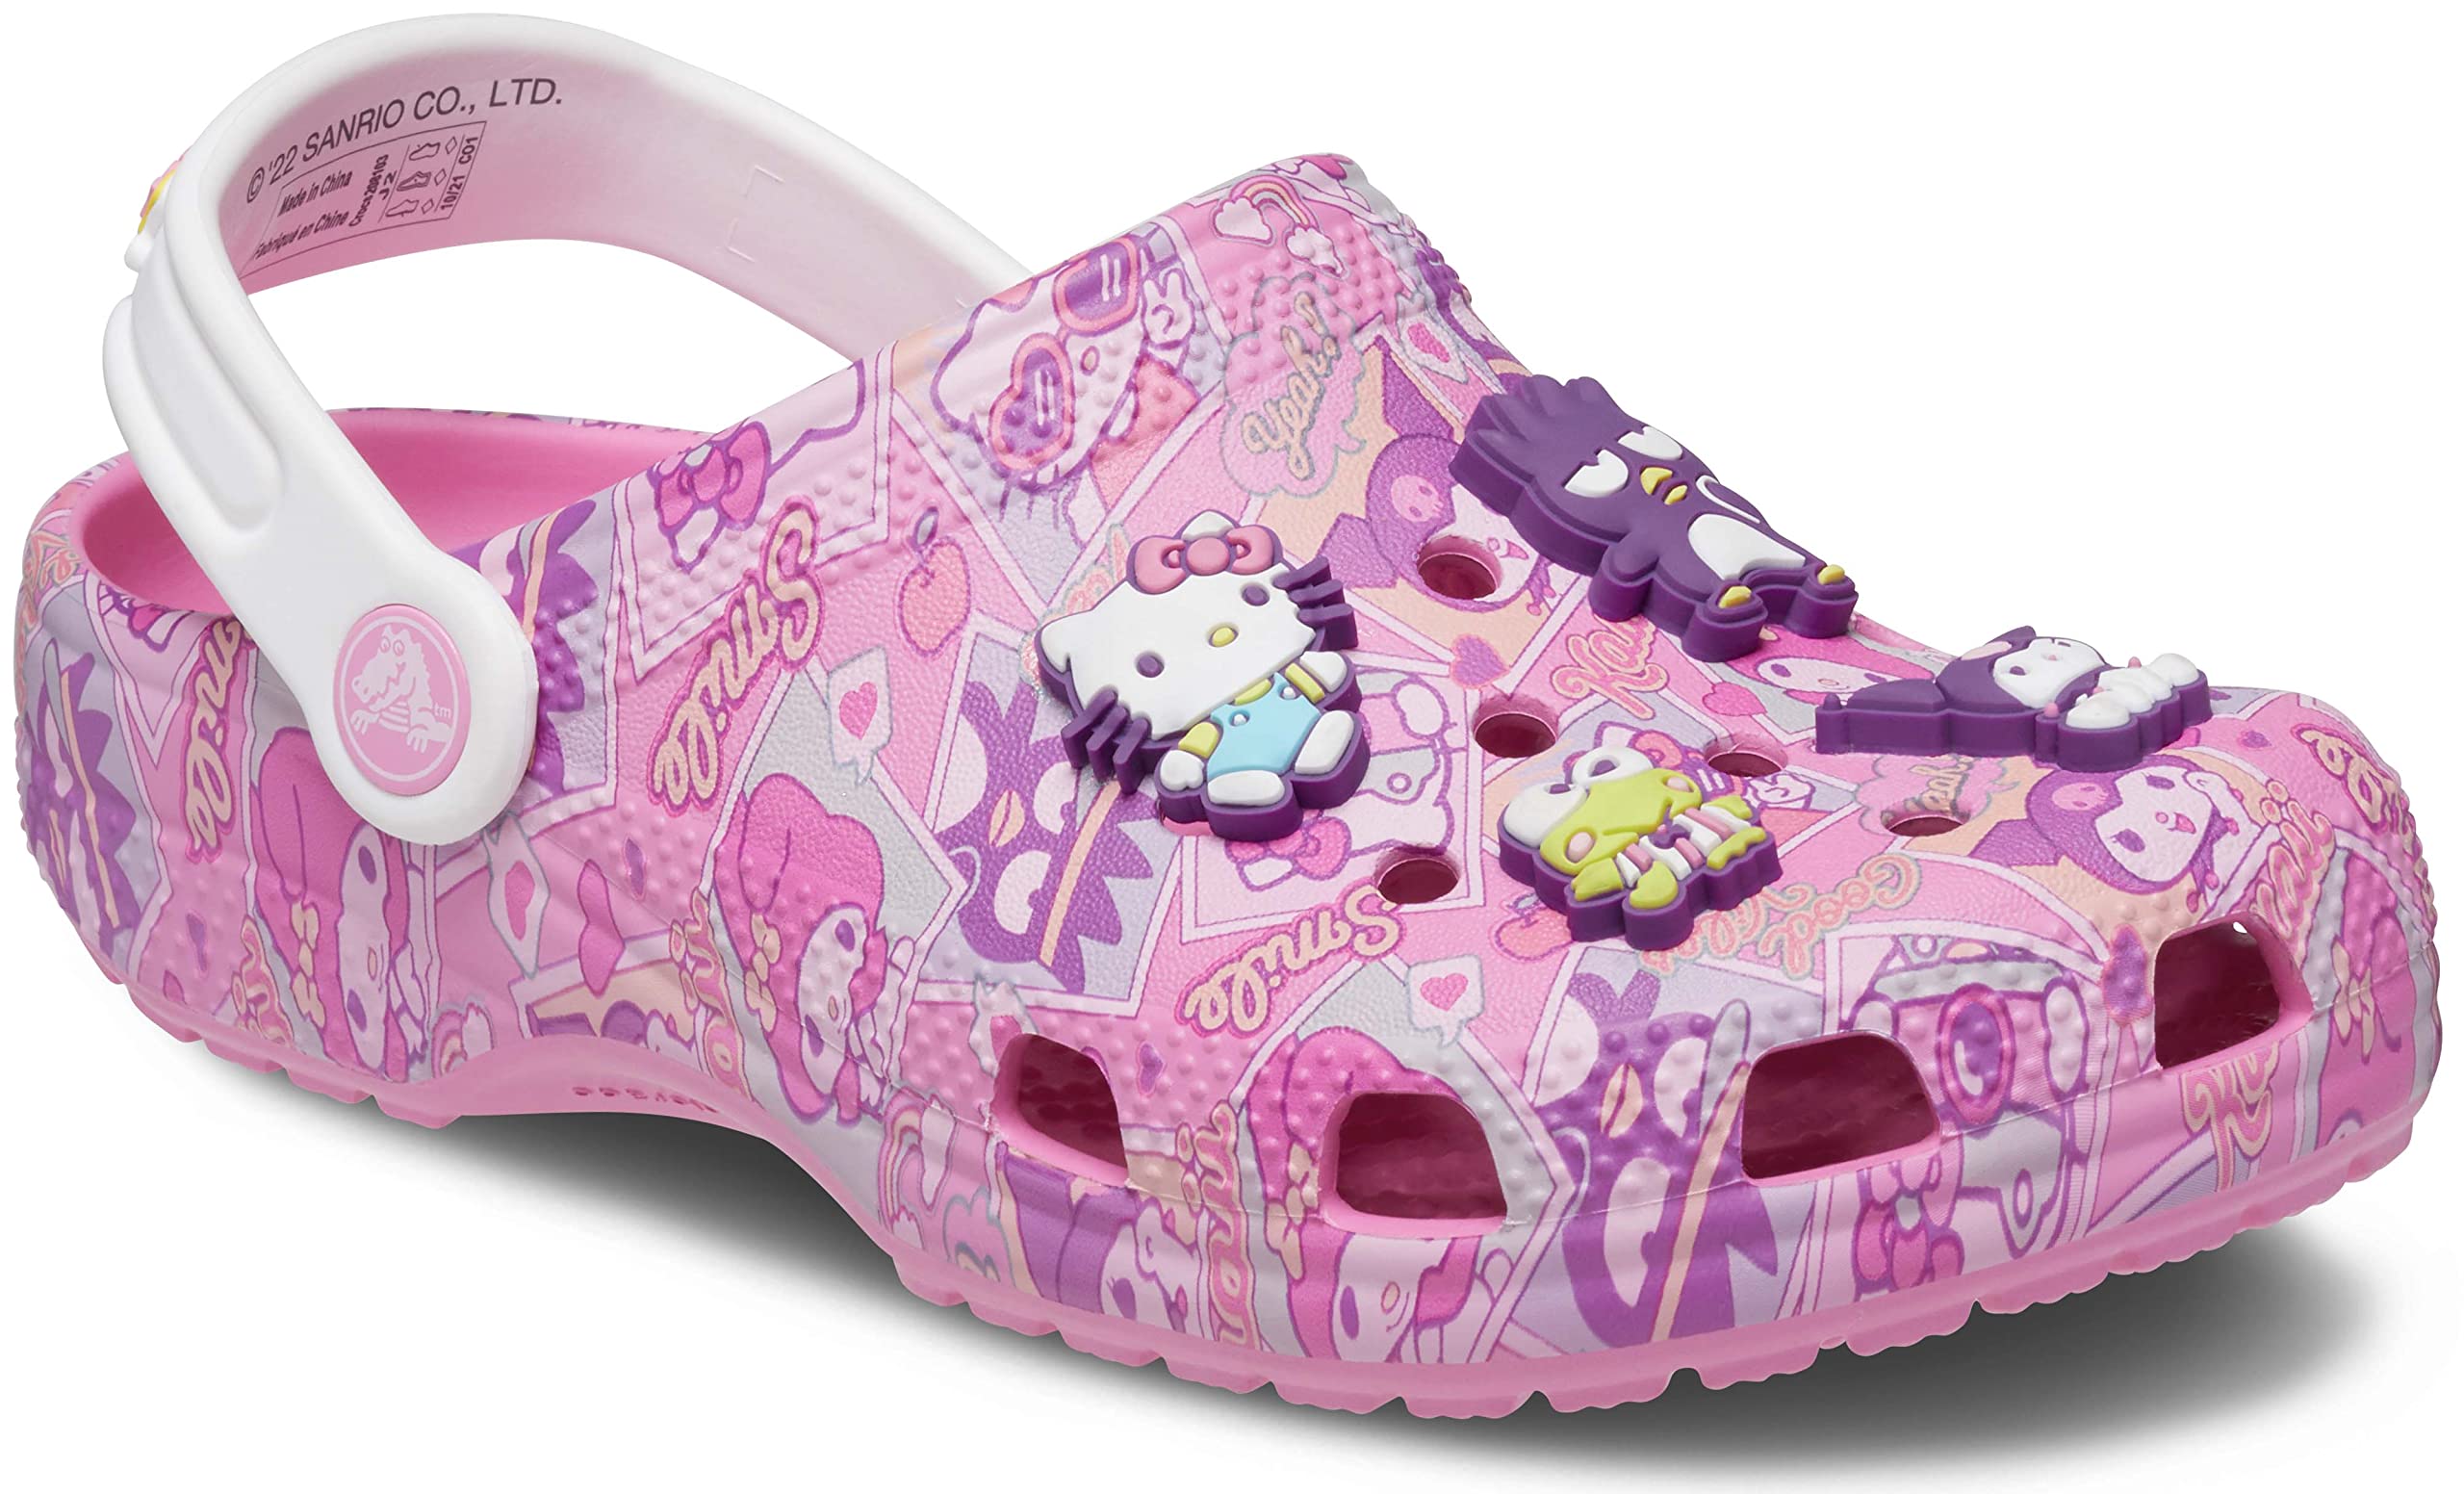 Crocs Unisex-Adult Classic Hello Kitty Clog